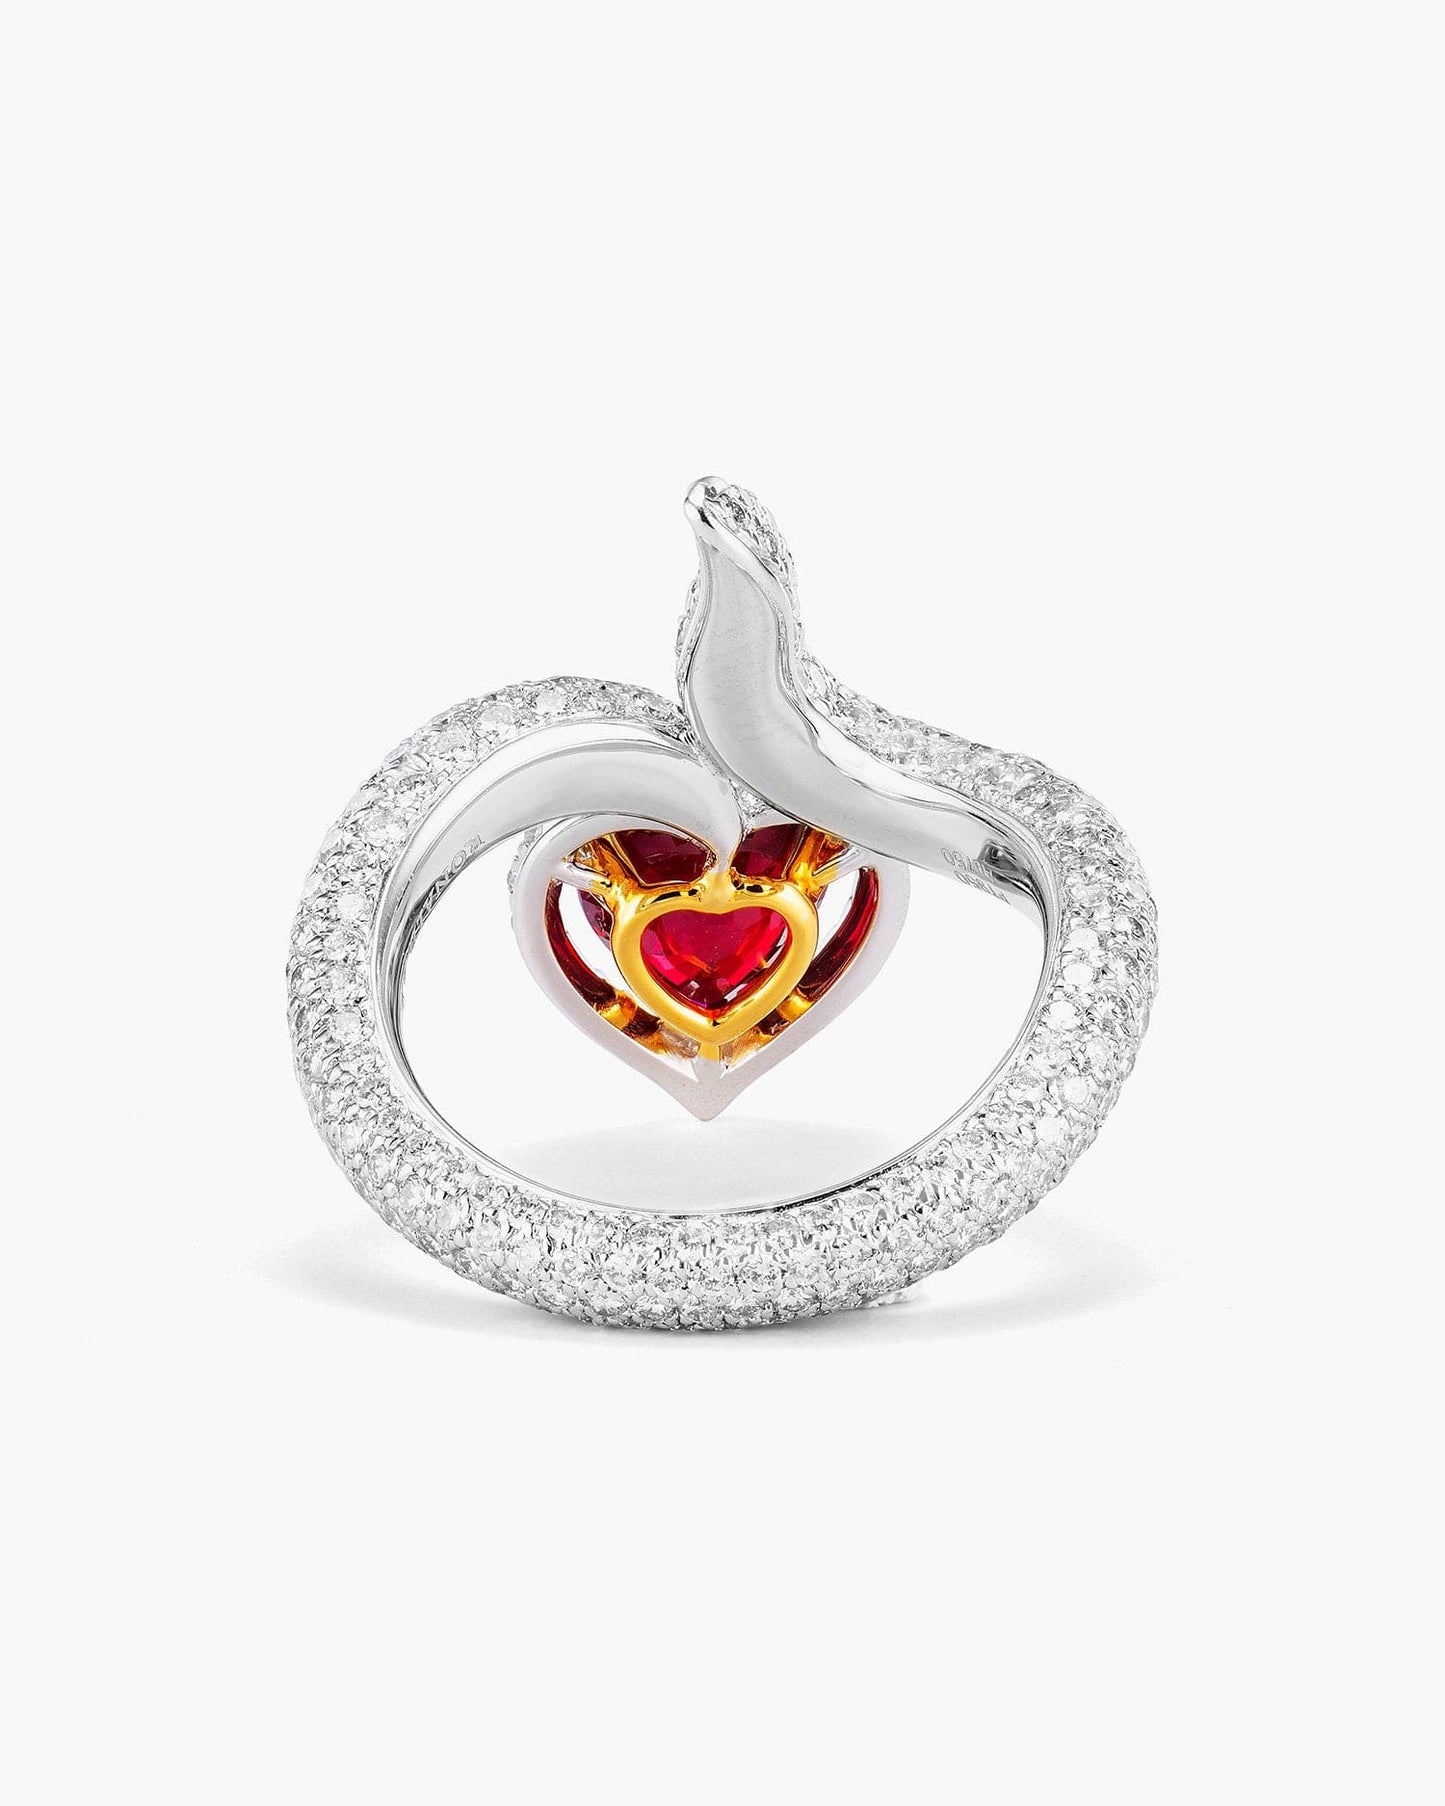 1.49 carat Heart Shape Burmese Ruby and Diamond Ring